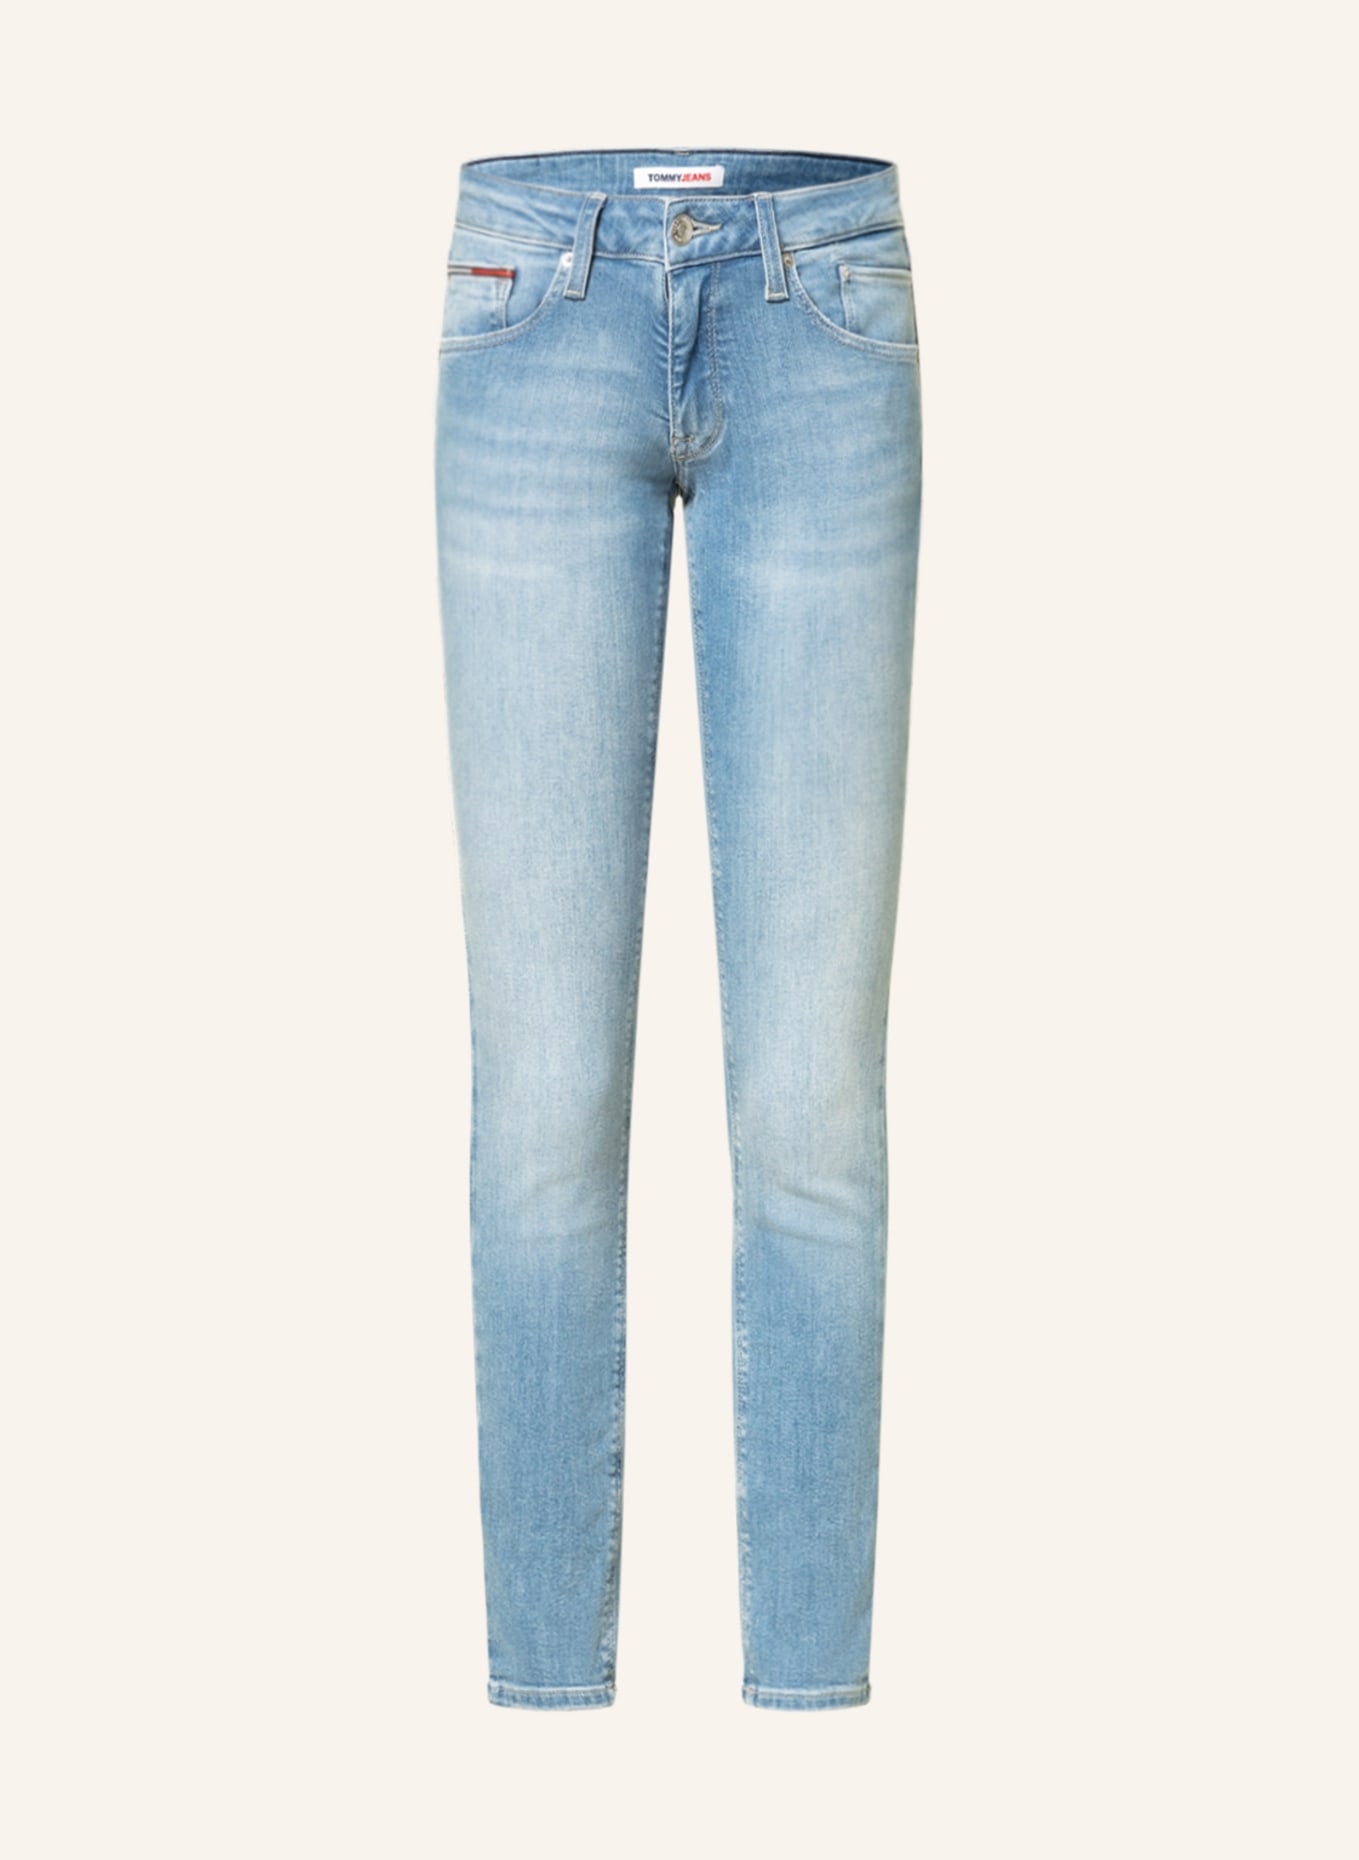 TOMMY JEANS Skinny Jeans SCARLETT, Farbe: 1AB Denim Light (Bild 1)